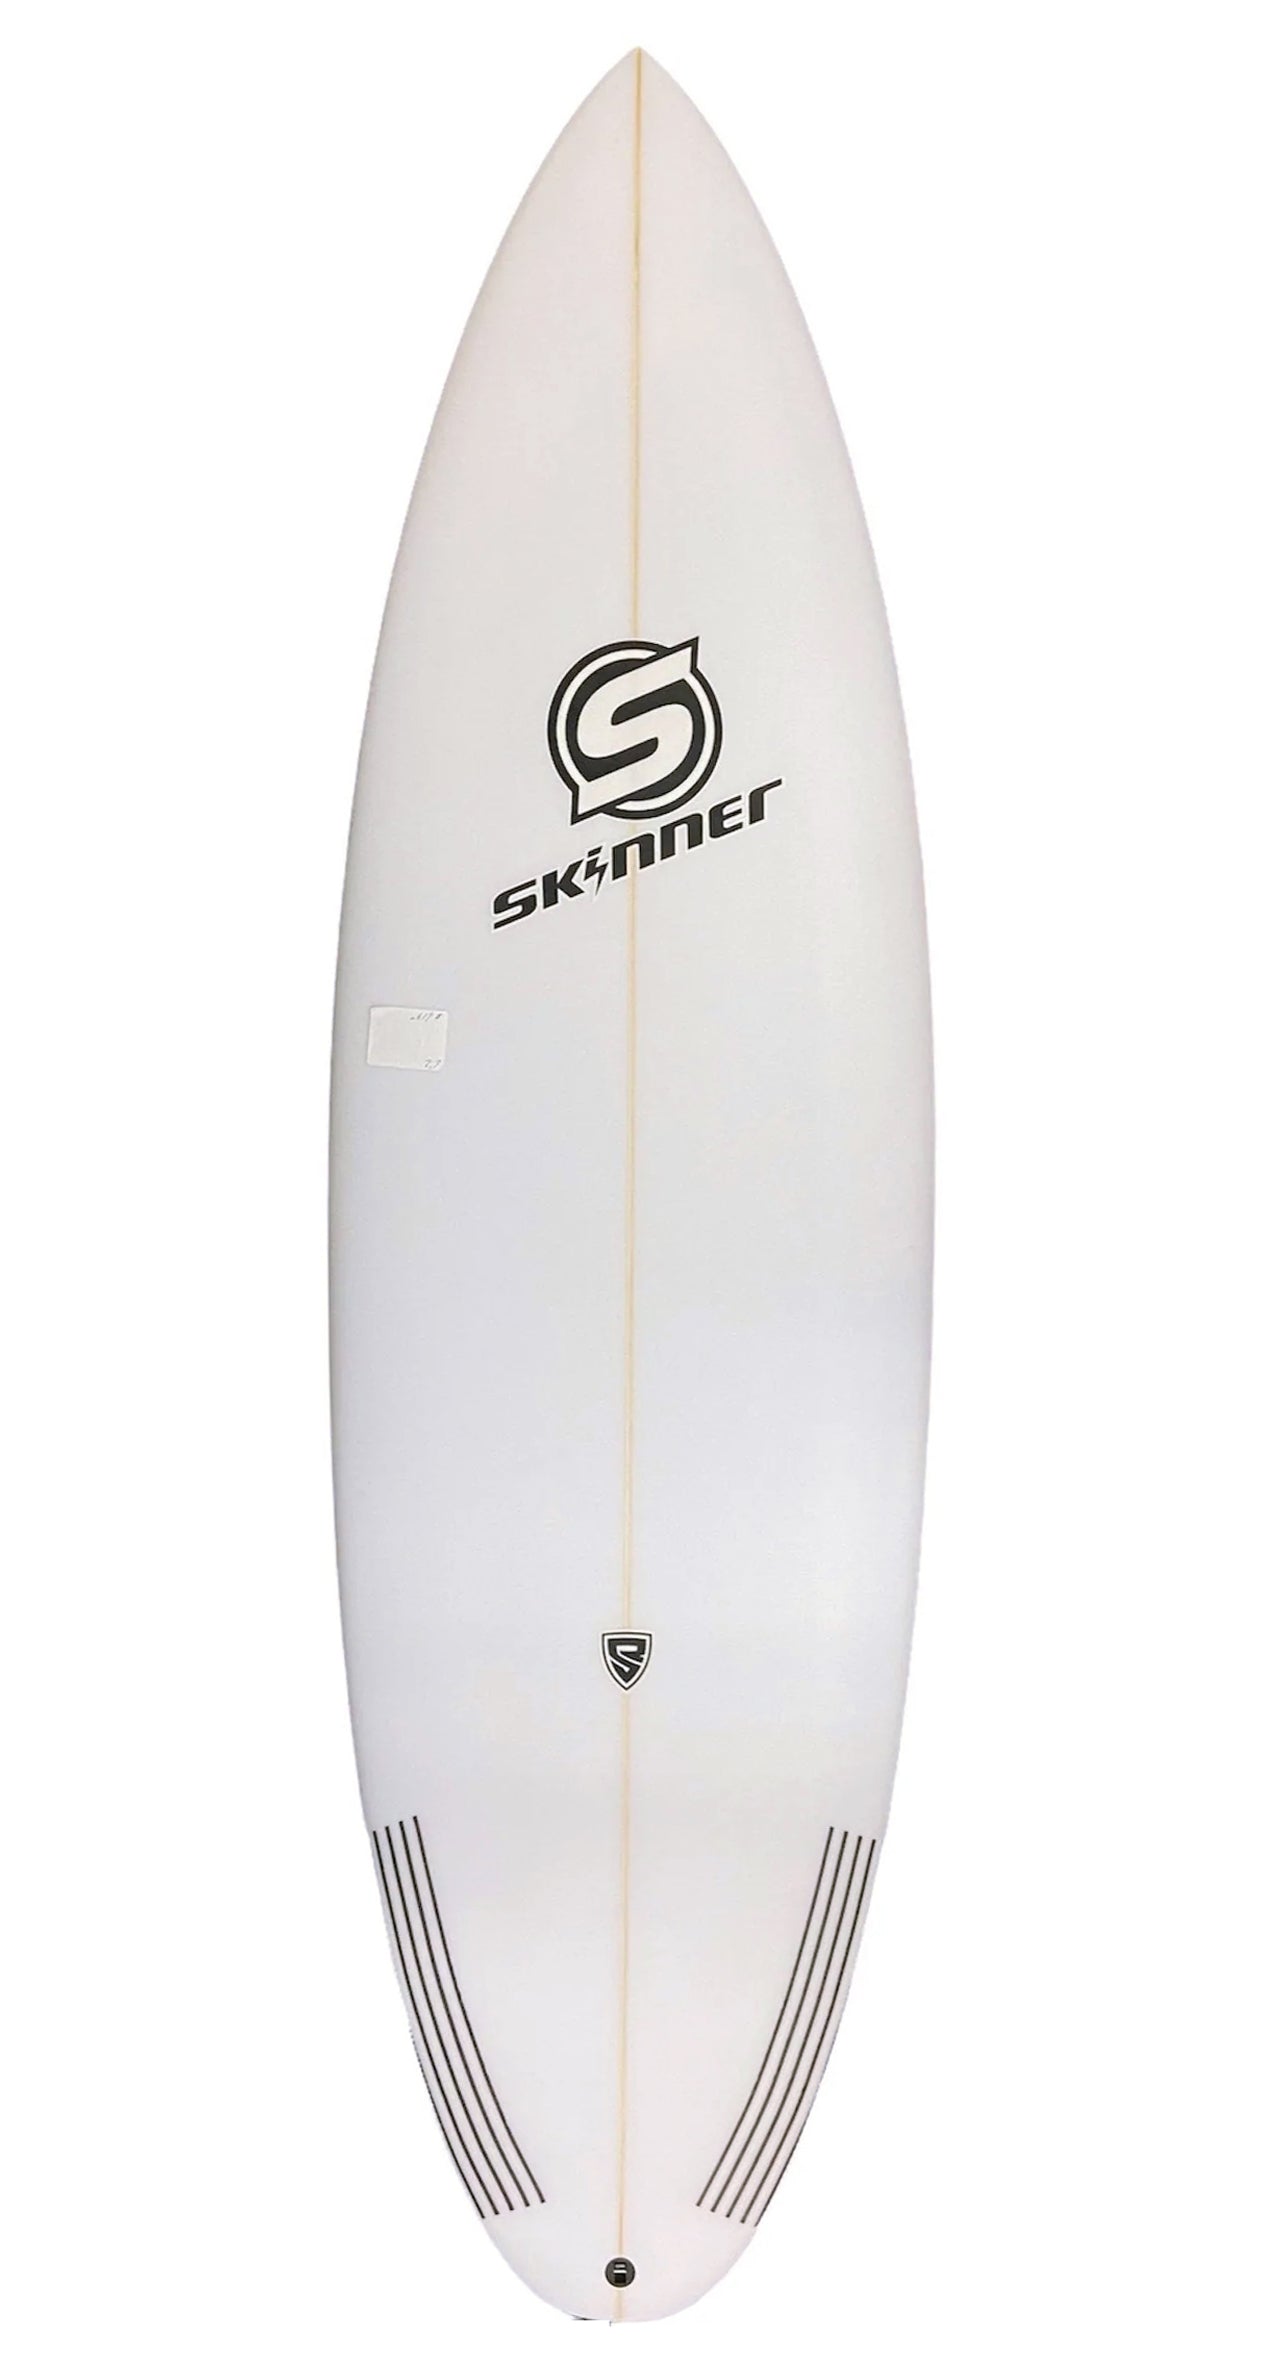 Skinner 6'2 x 21 x 36.5 Liters Round Tail Shortboard 5 FCS 2 Plugs Surfboard